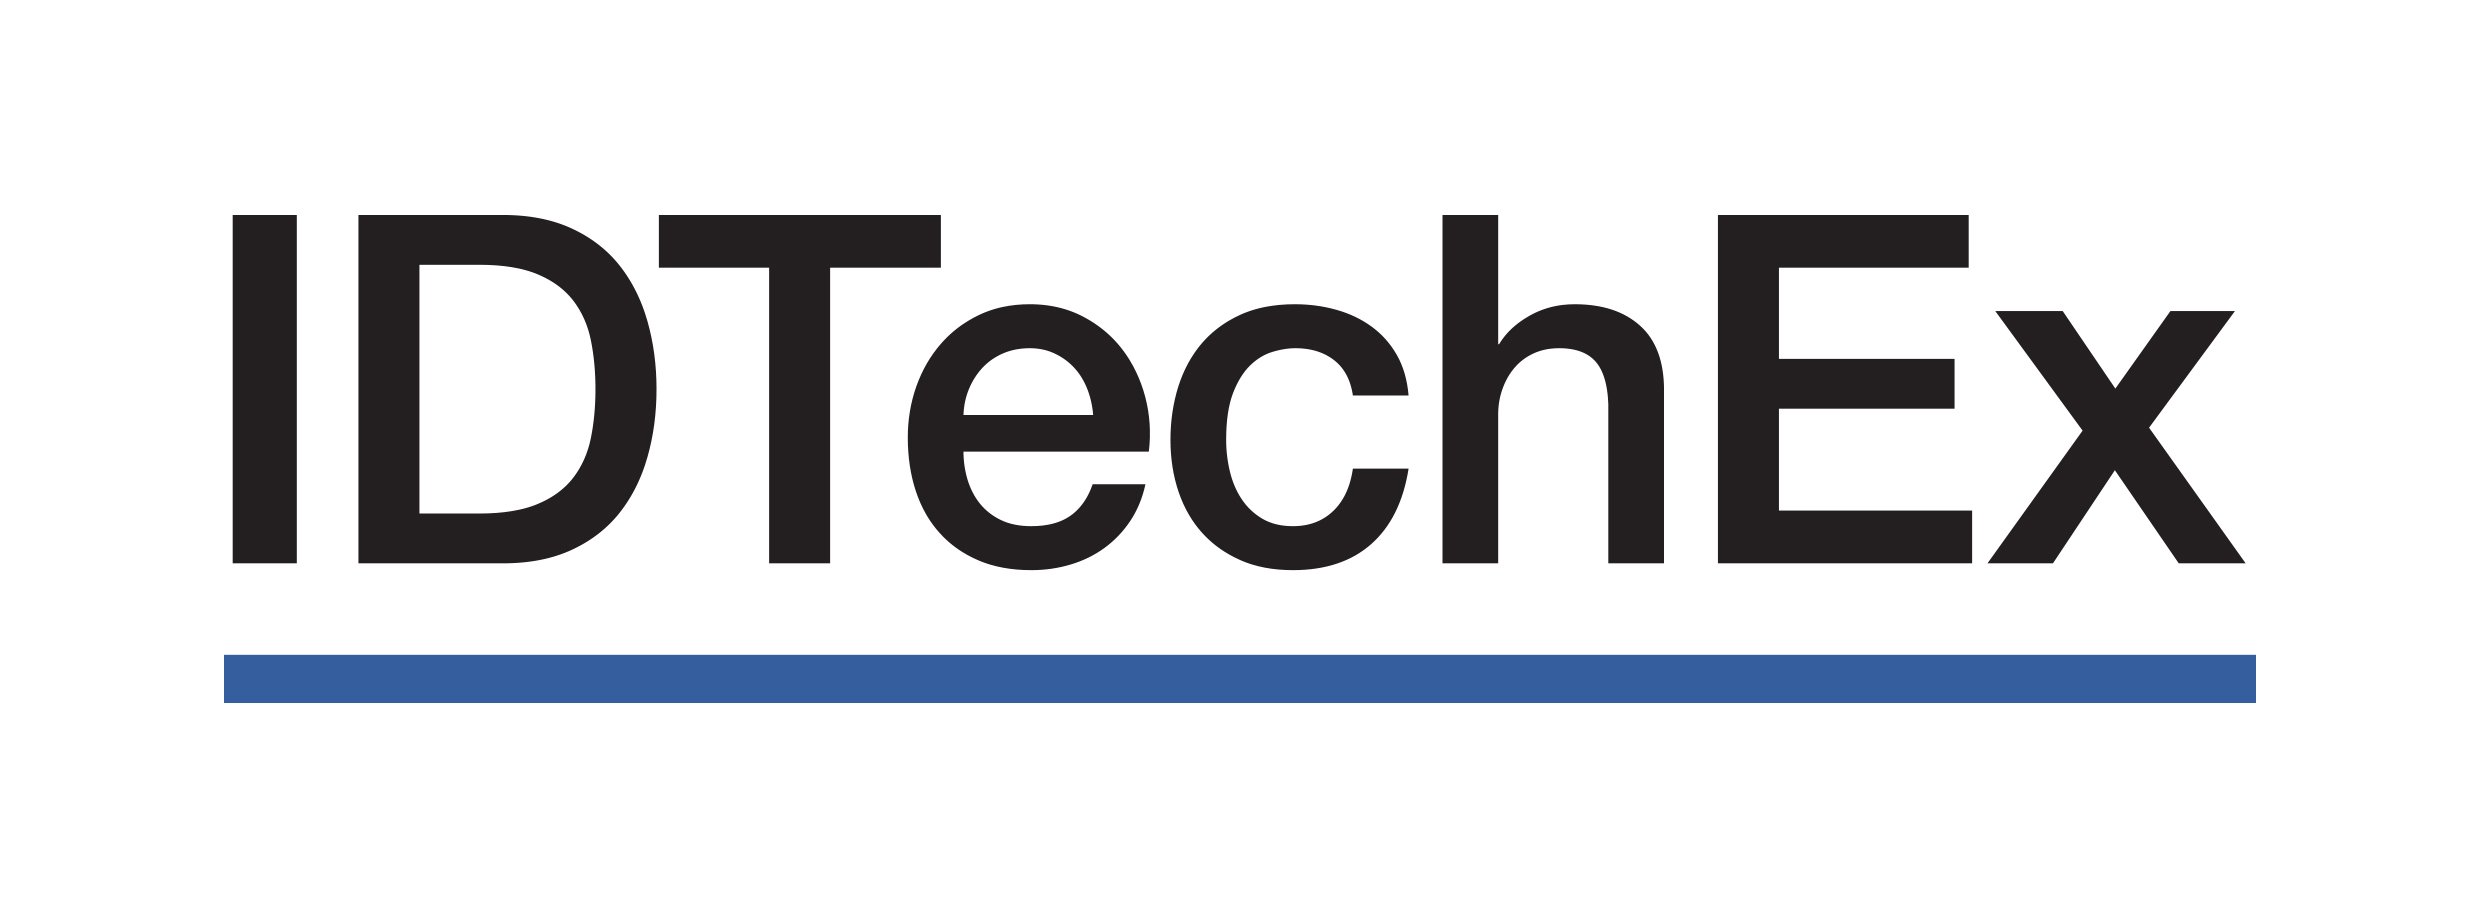 IDTechEx logo.jpg